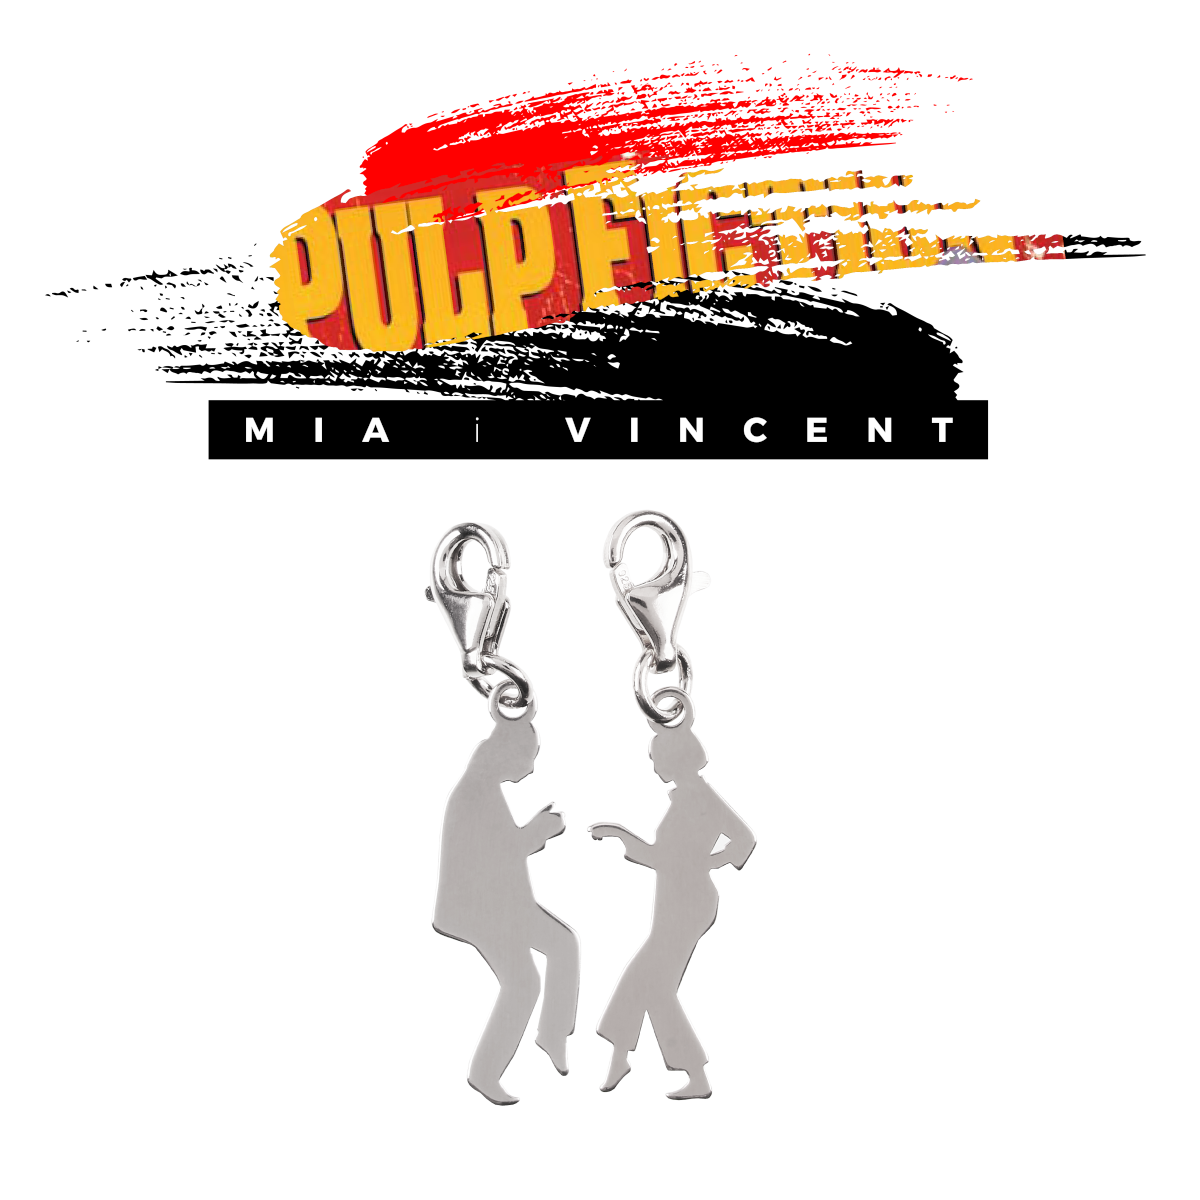 2 srebrne zawieszki Mia i Vincent